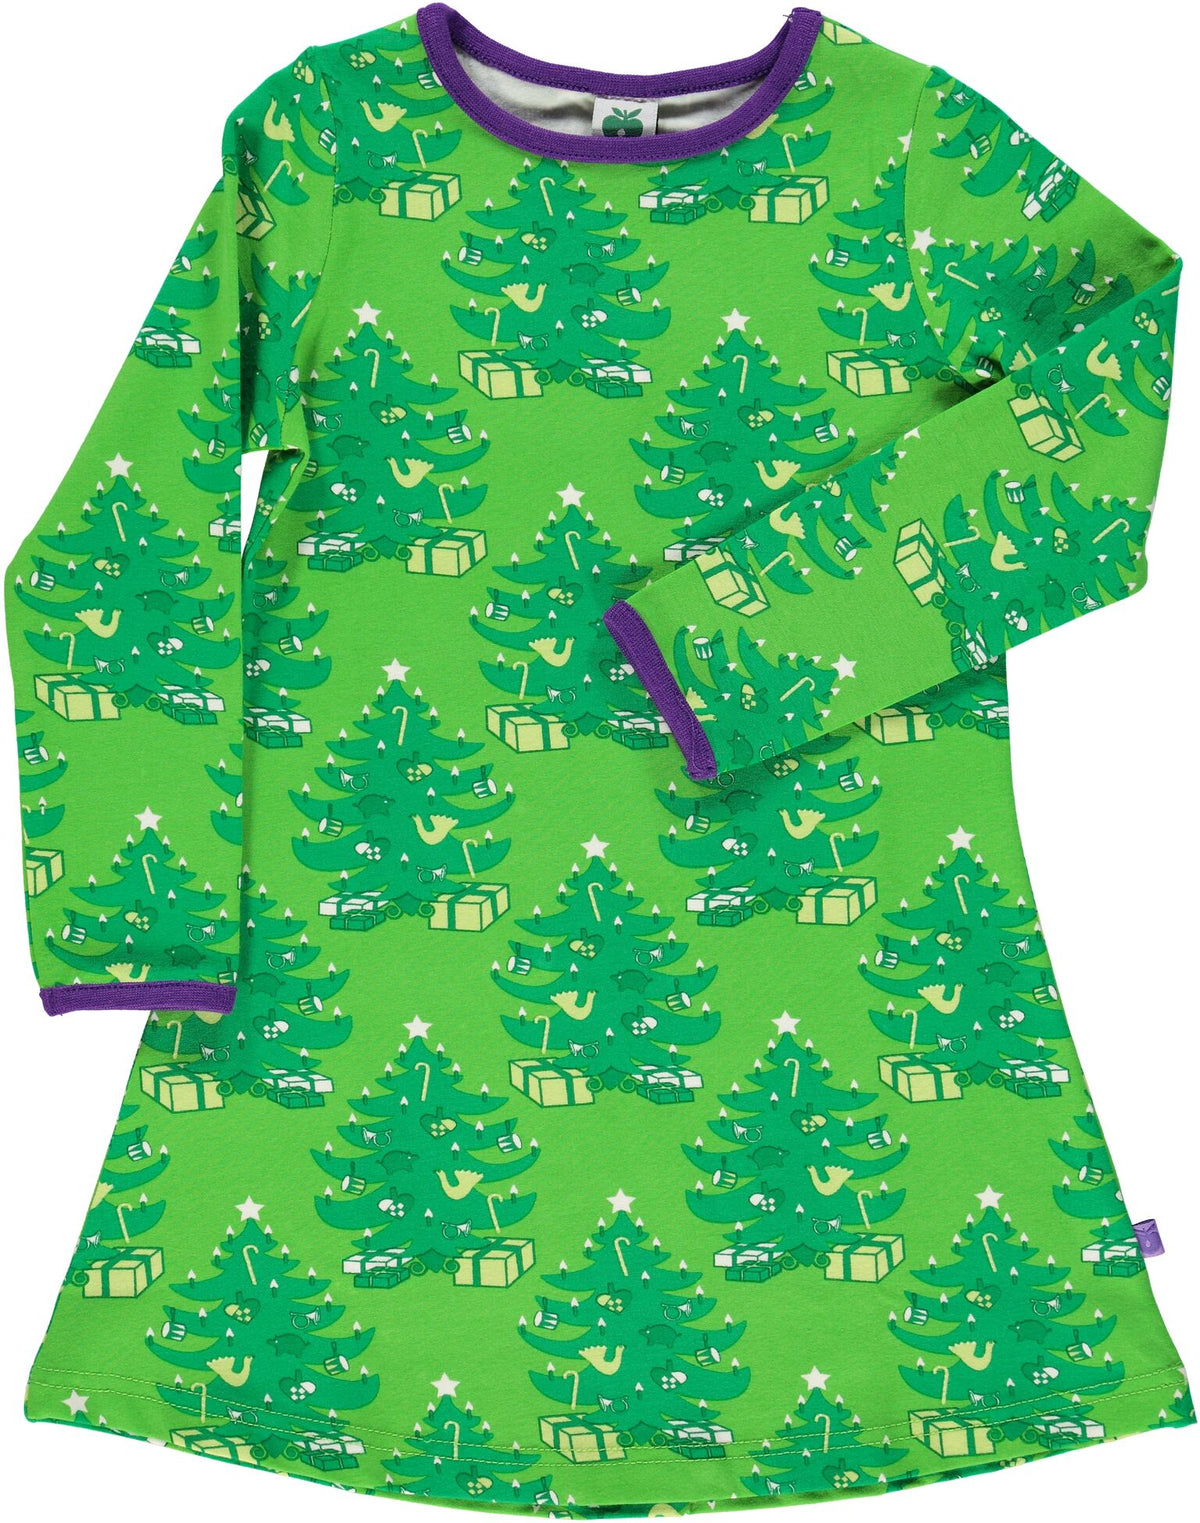 Smafolk - Dress Christmas Trees - Groene jurk met kerstbomen en cadeaus